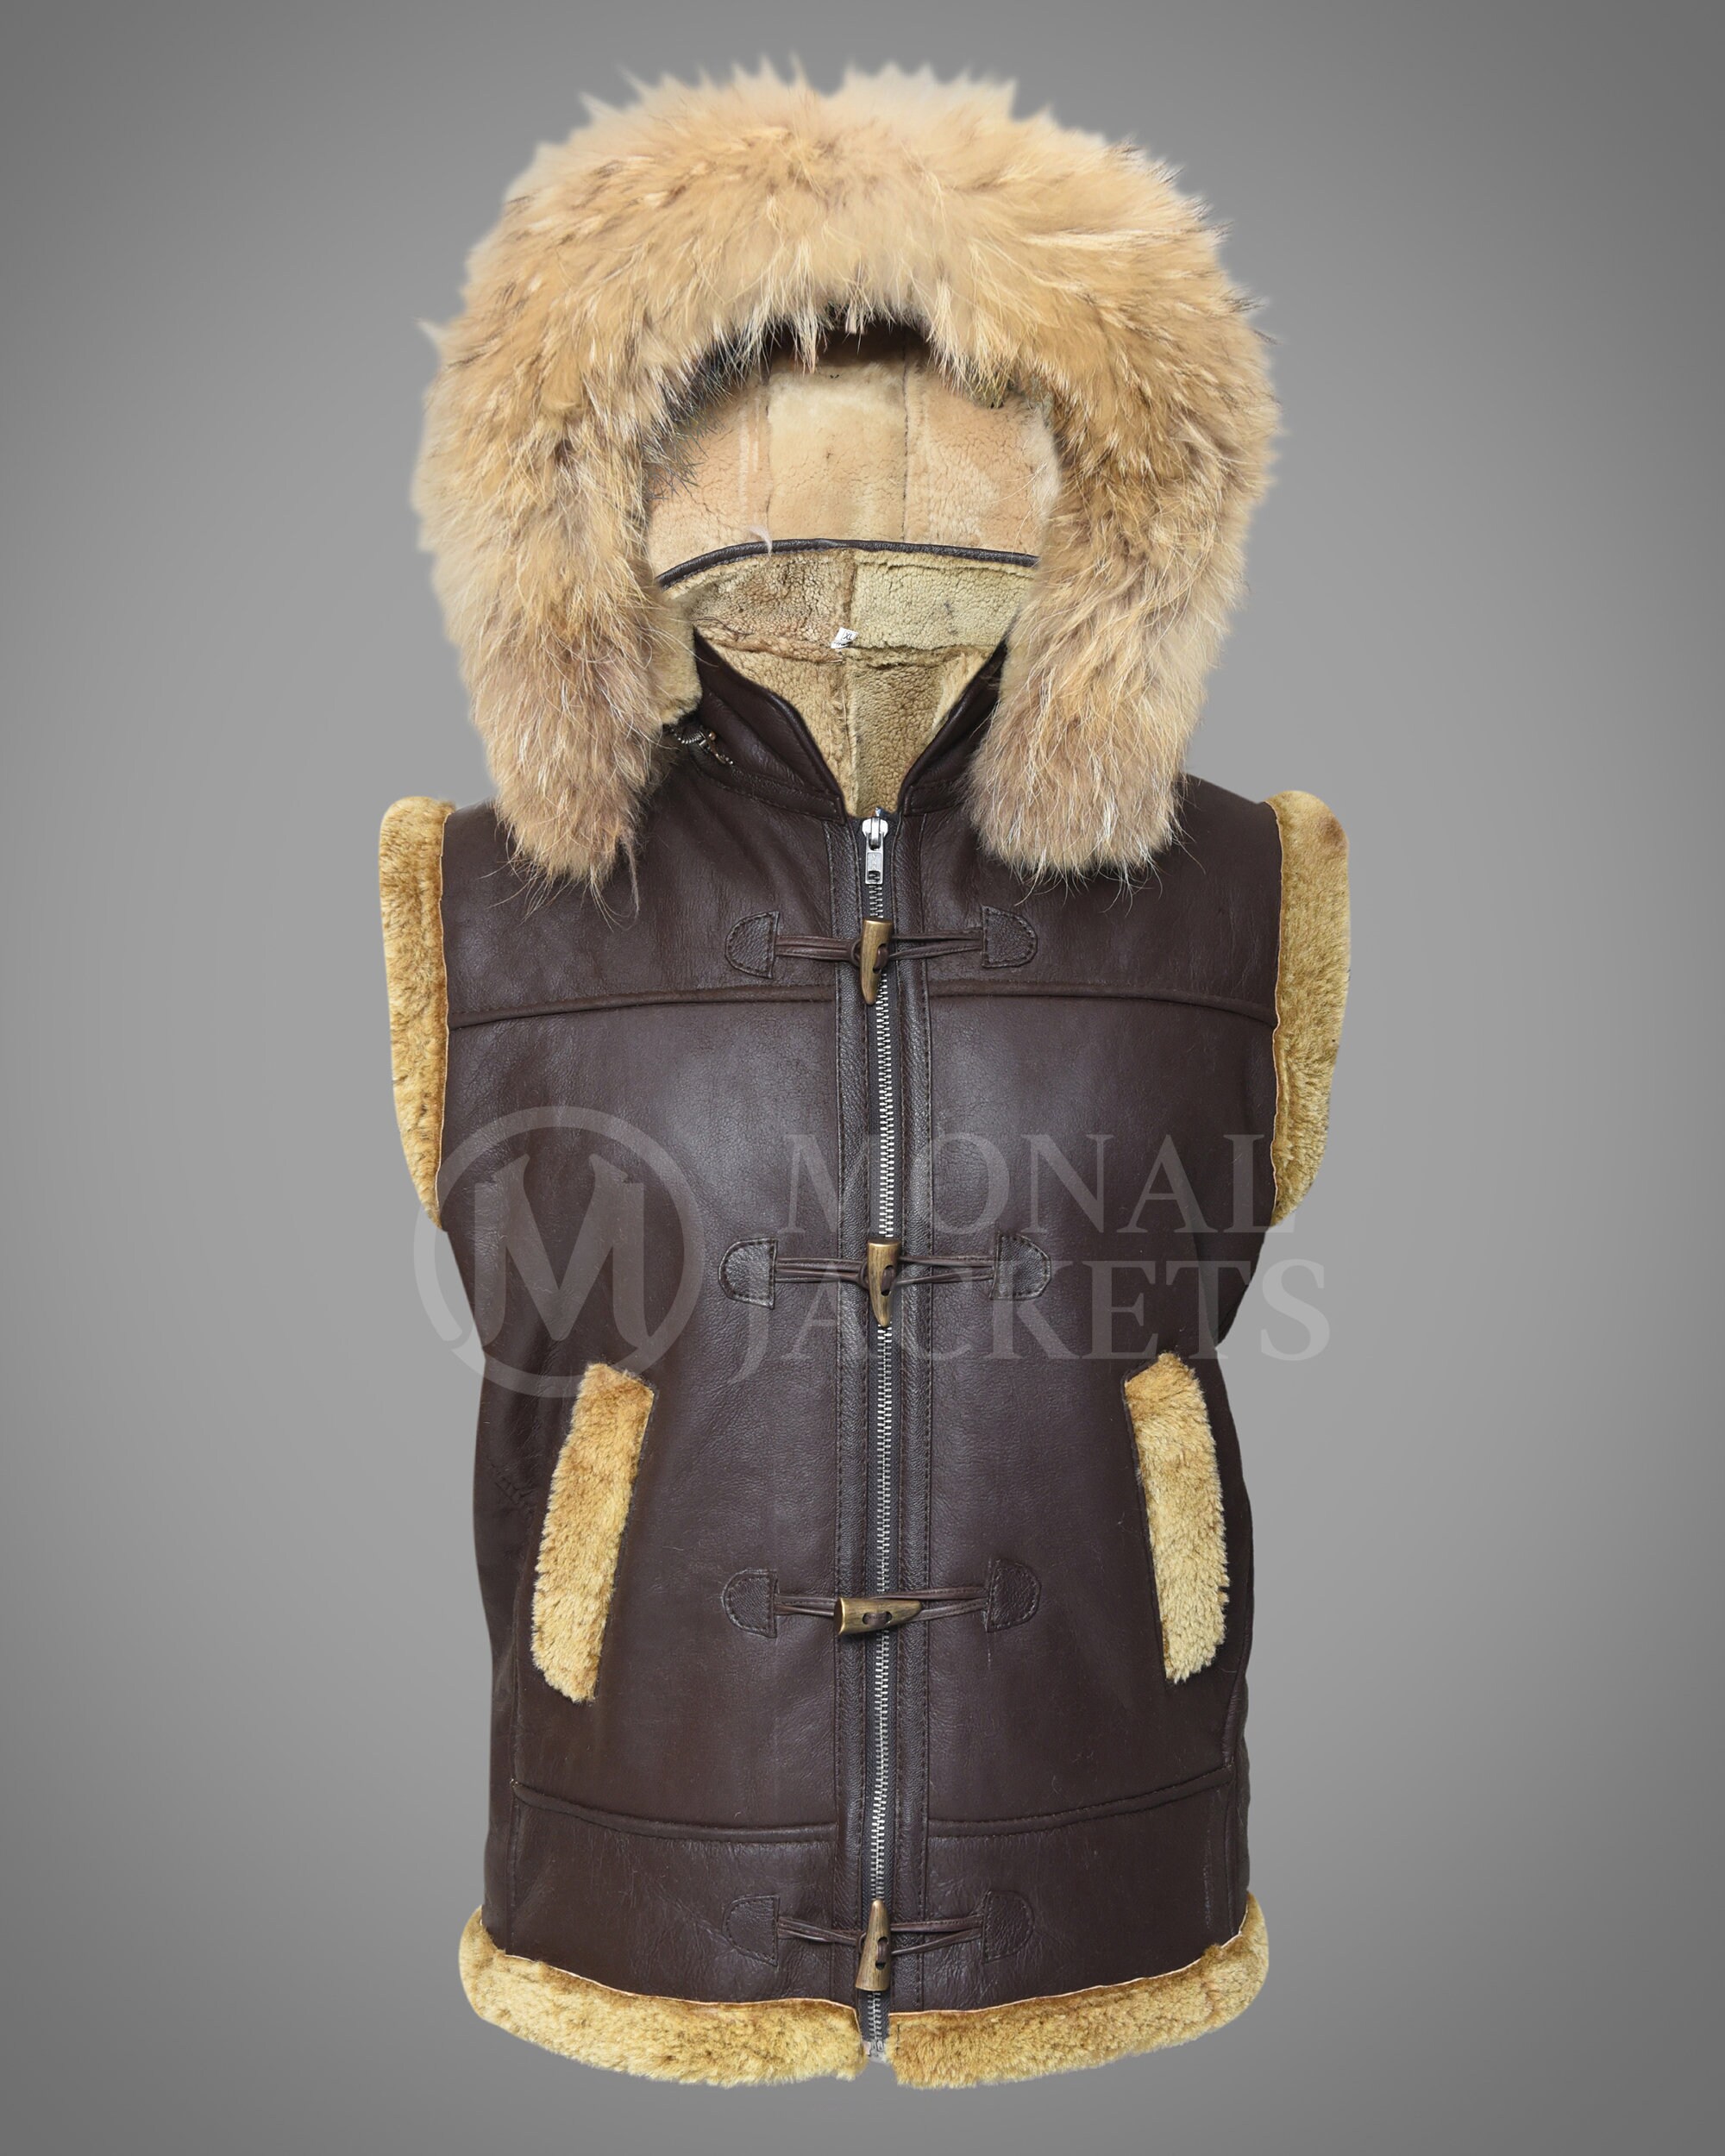 Vtg Rabbit Fur Vest Fashion Clothing Cosplay Costume Tie Front Sz M Brown  Spot